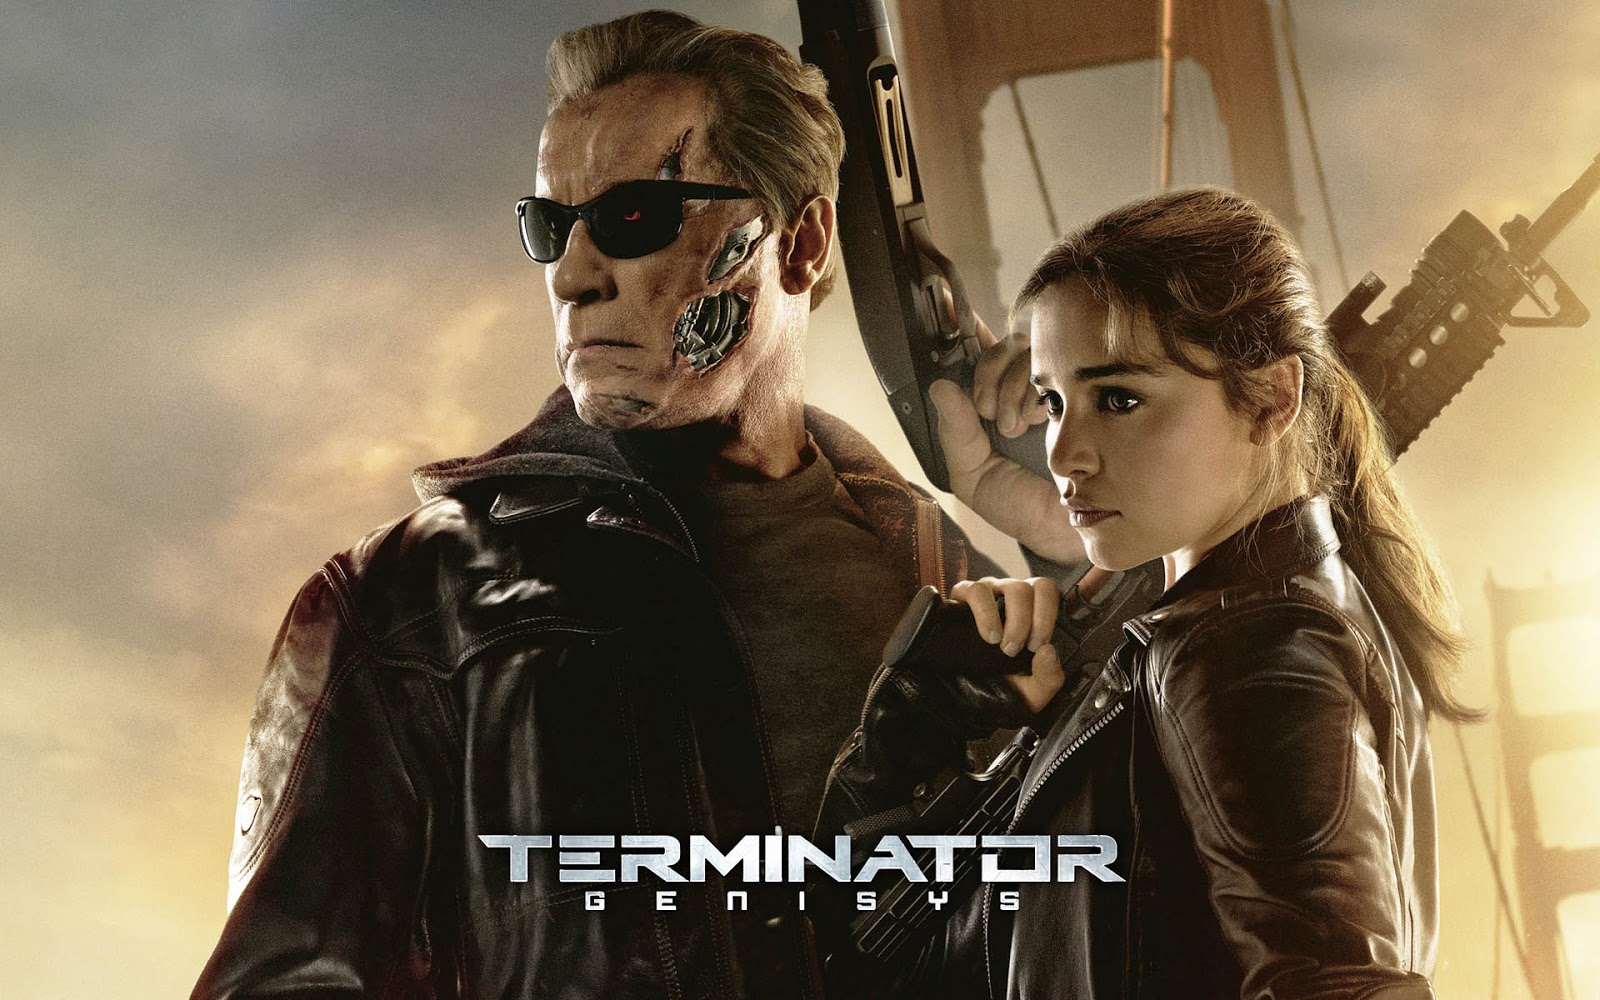 Terminator Genisys Backgrounds, Compatible - PC, Mobile, Gadgets| 1600x1000 px